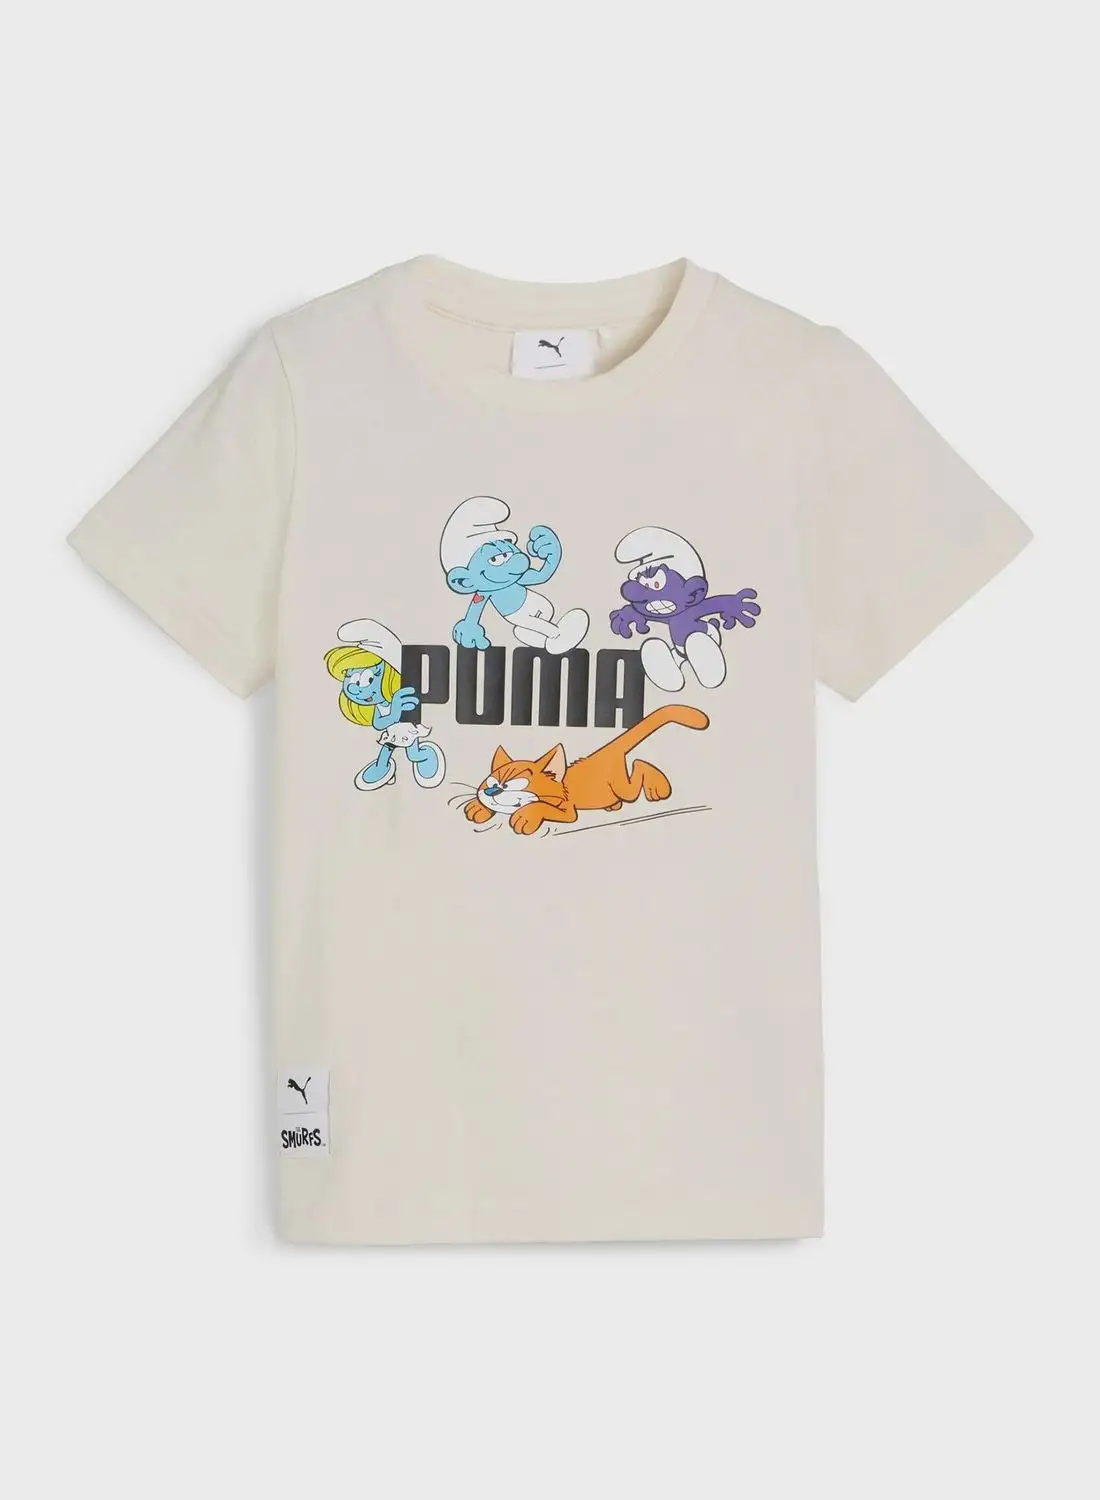 PUMA Kids The Smurfs Graphic T-Shirt